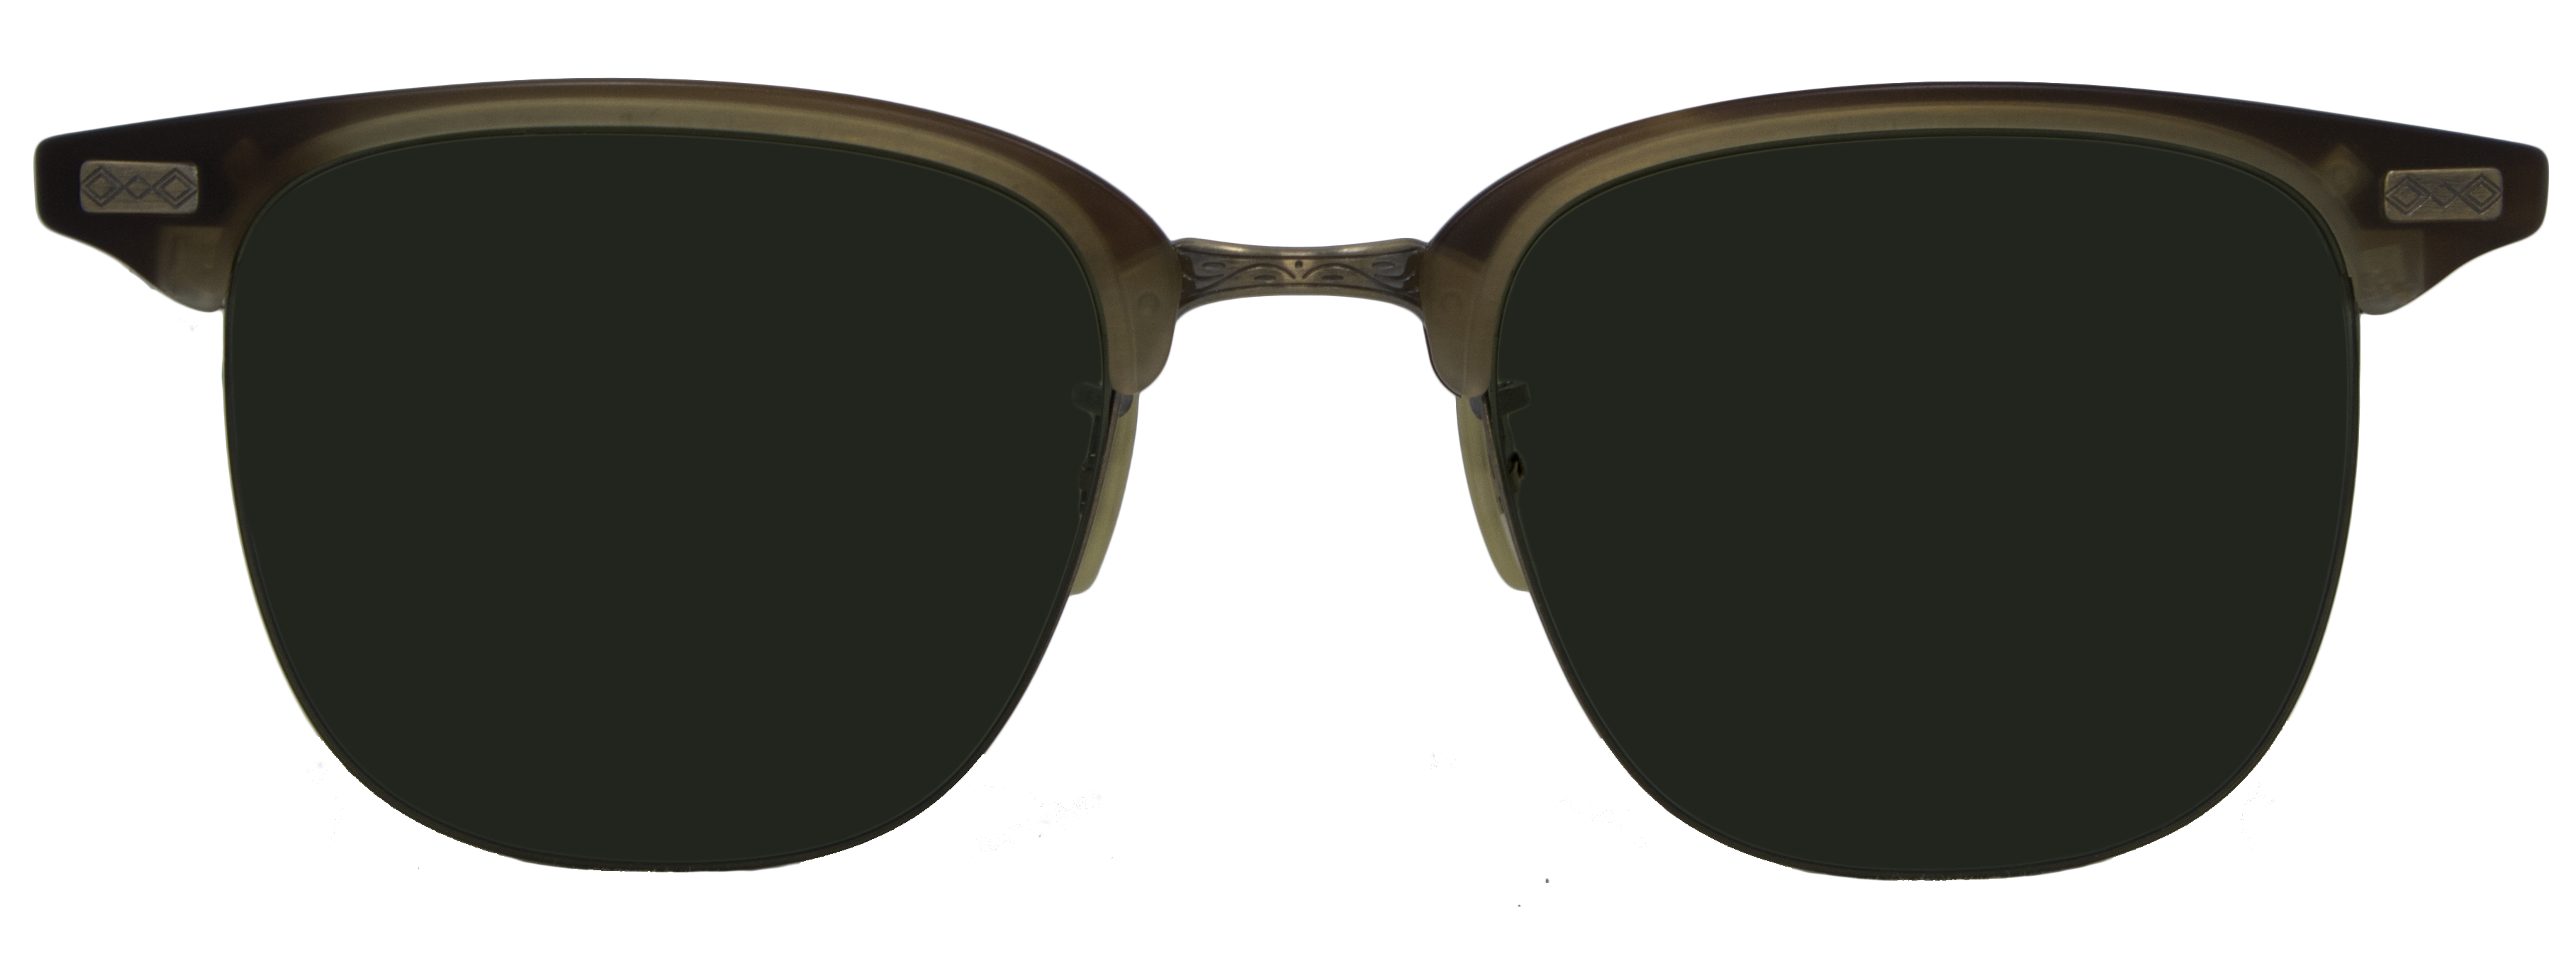 sunglasses png ragsdale martin optical shop tyler quality eyewear #10824